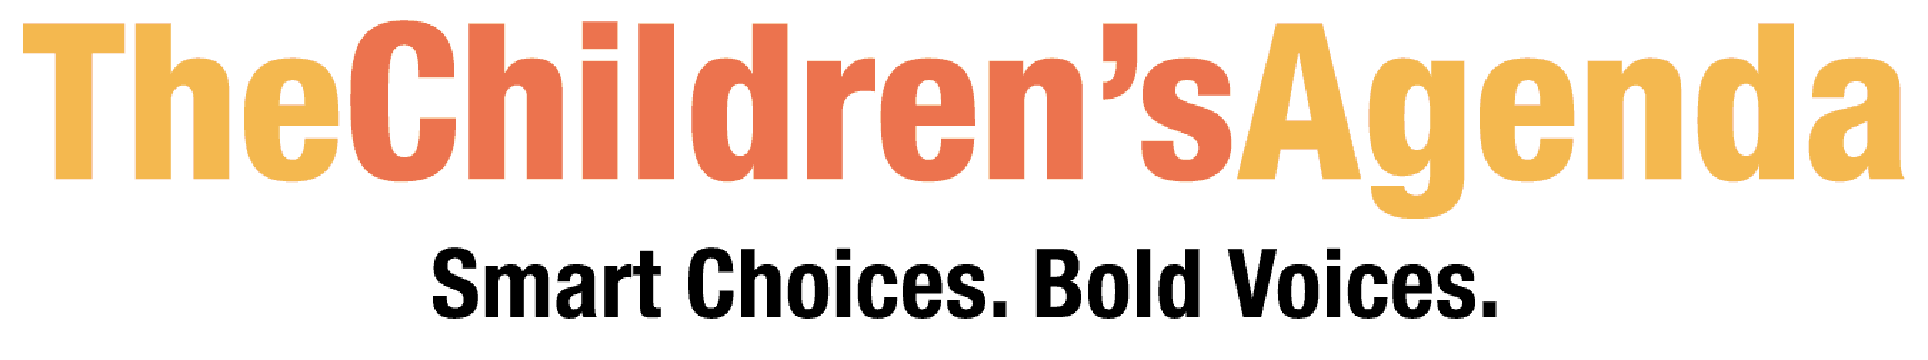 Success Sponsor: The Children's Agenda